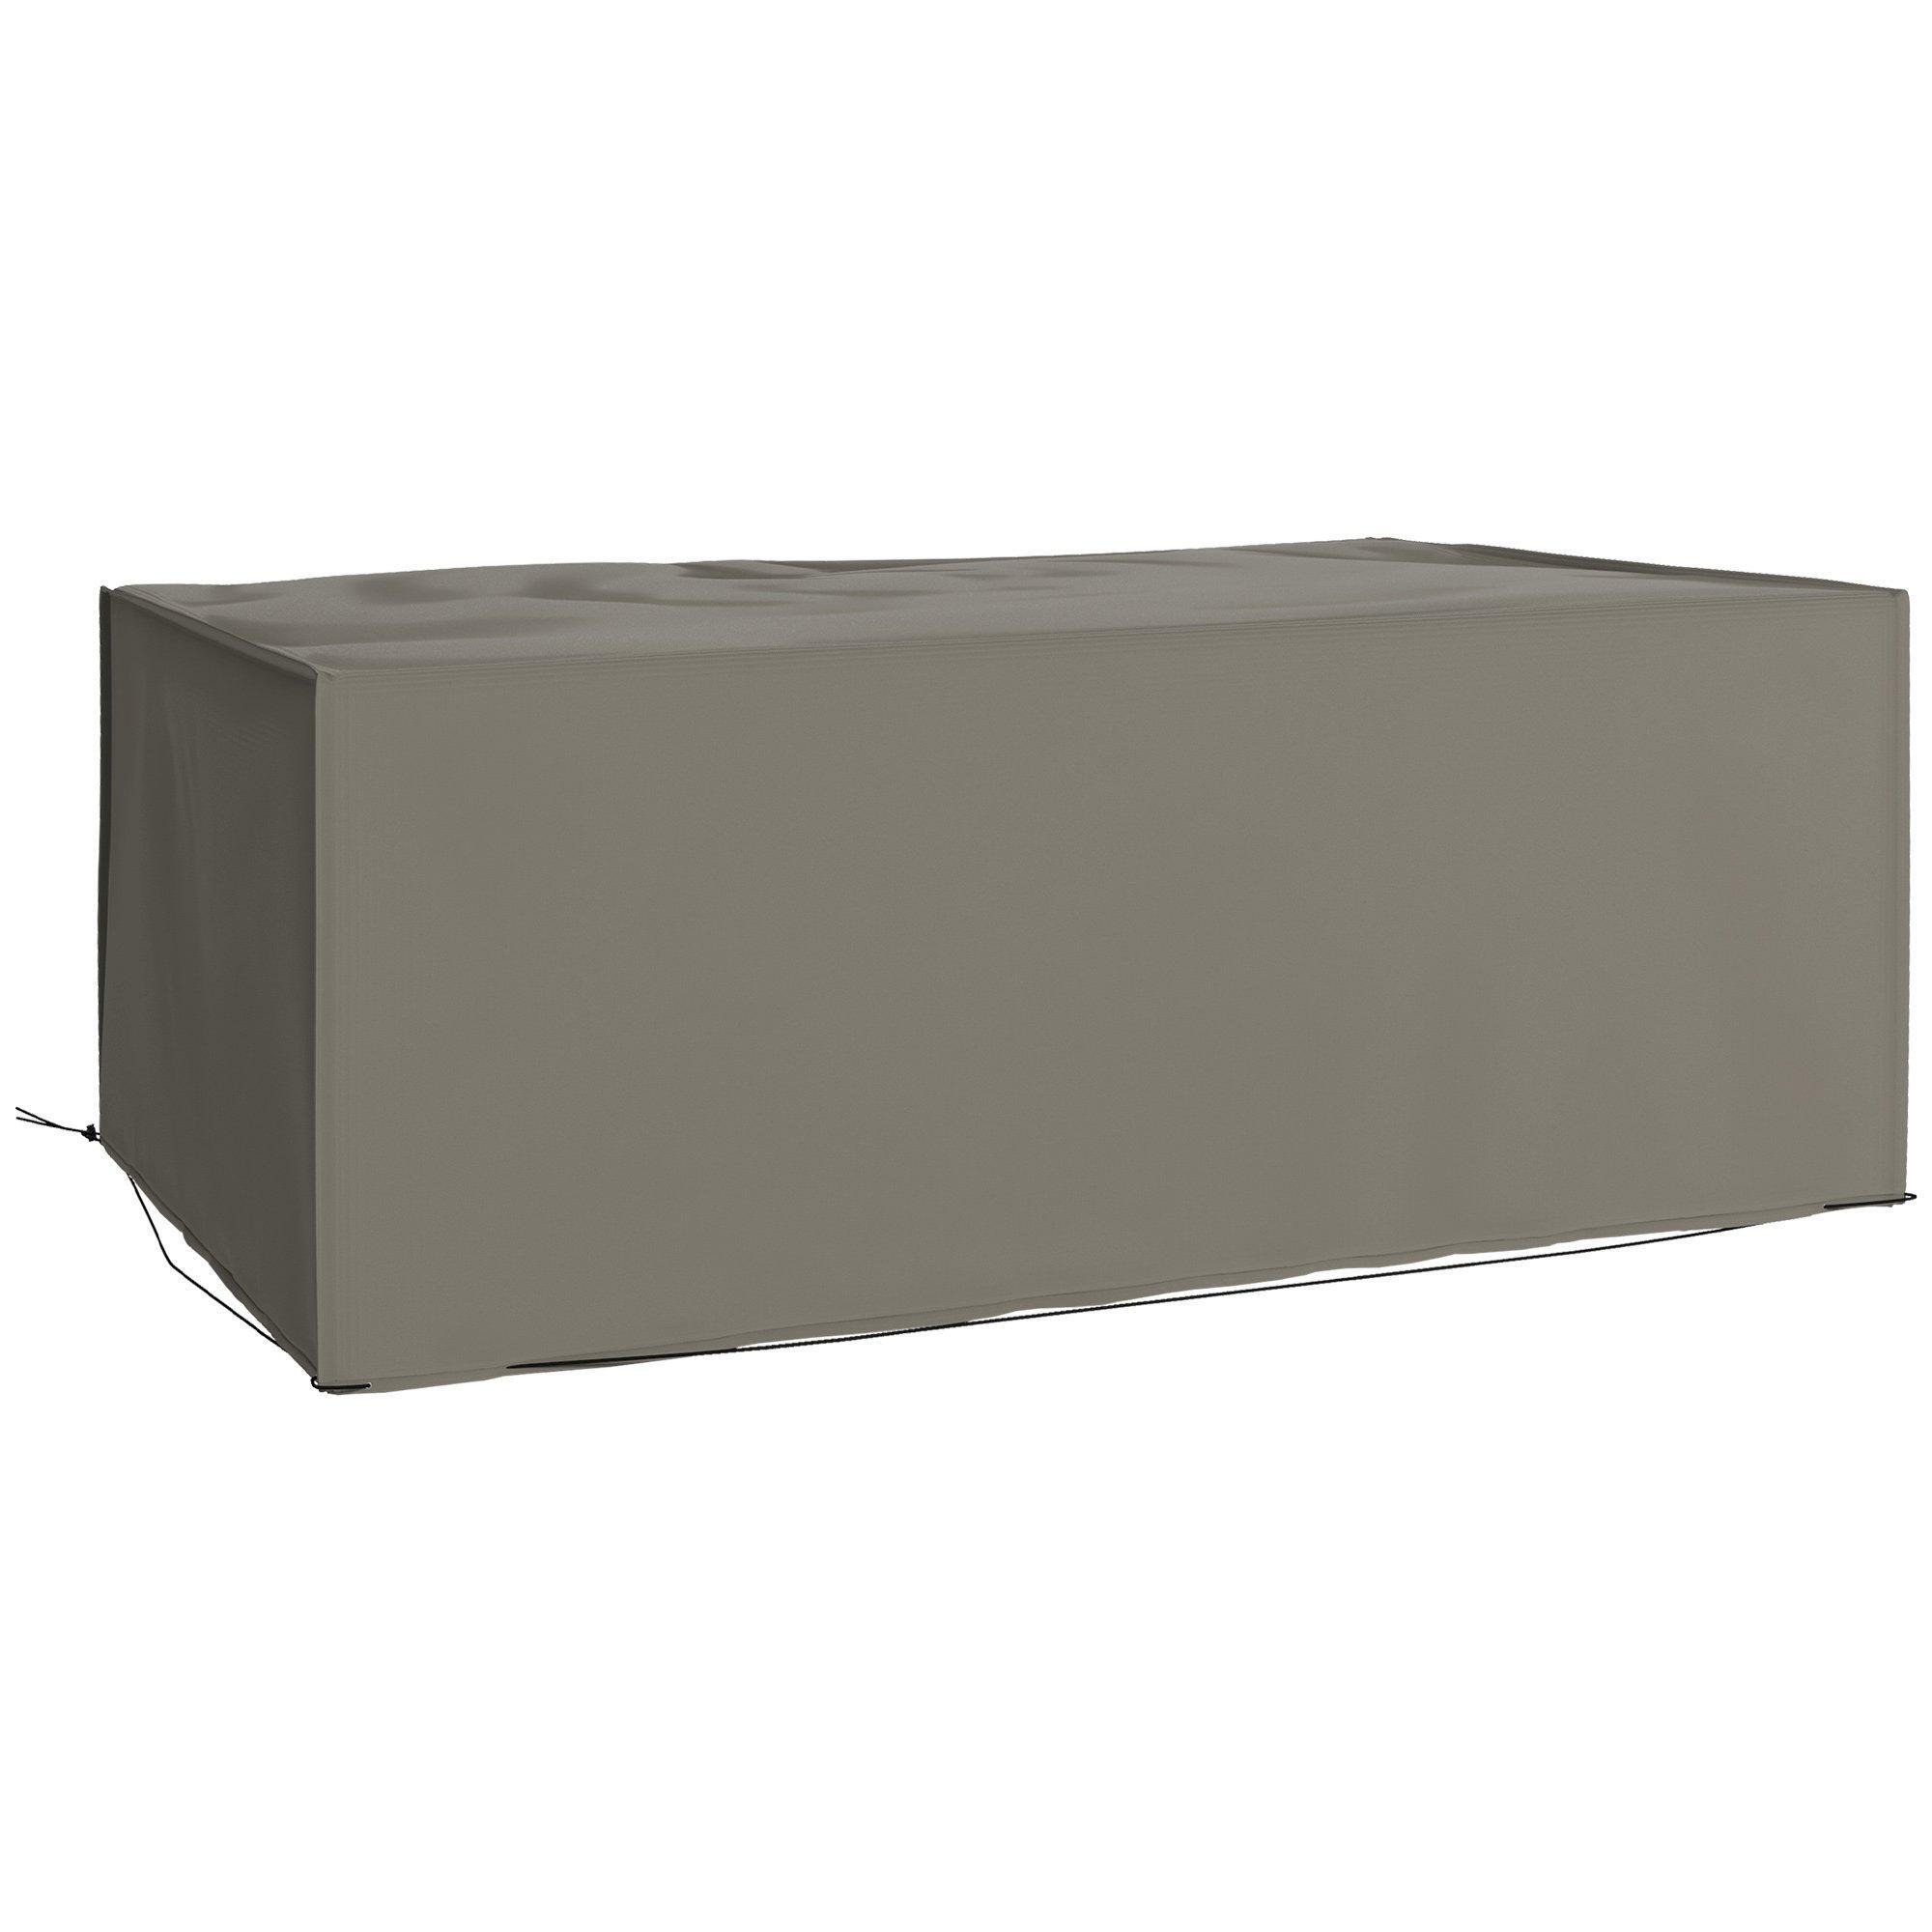 210x140x80cm UV Rain Protective Cover for Garden Rattan Furniture - image 1